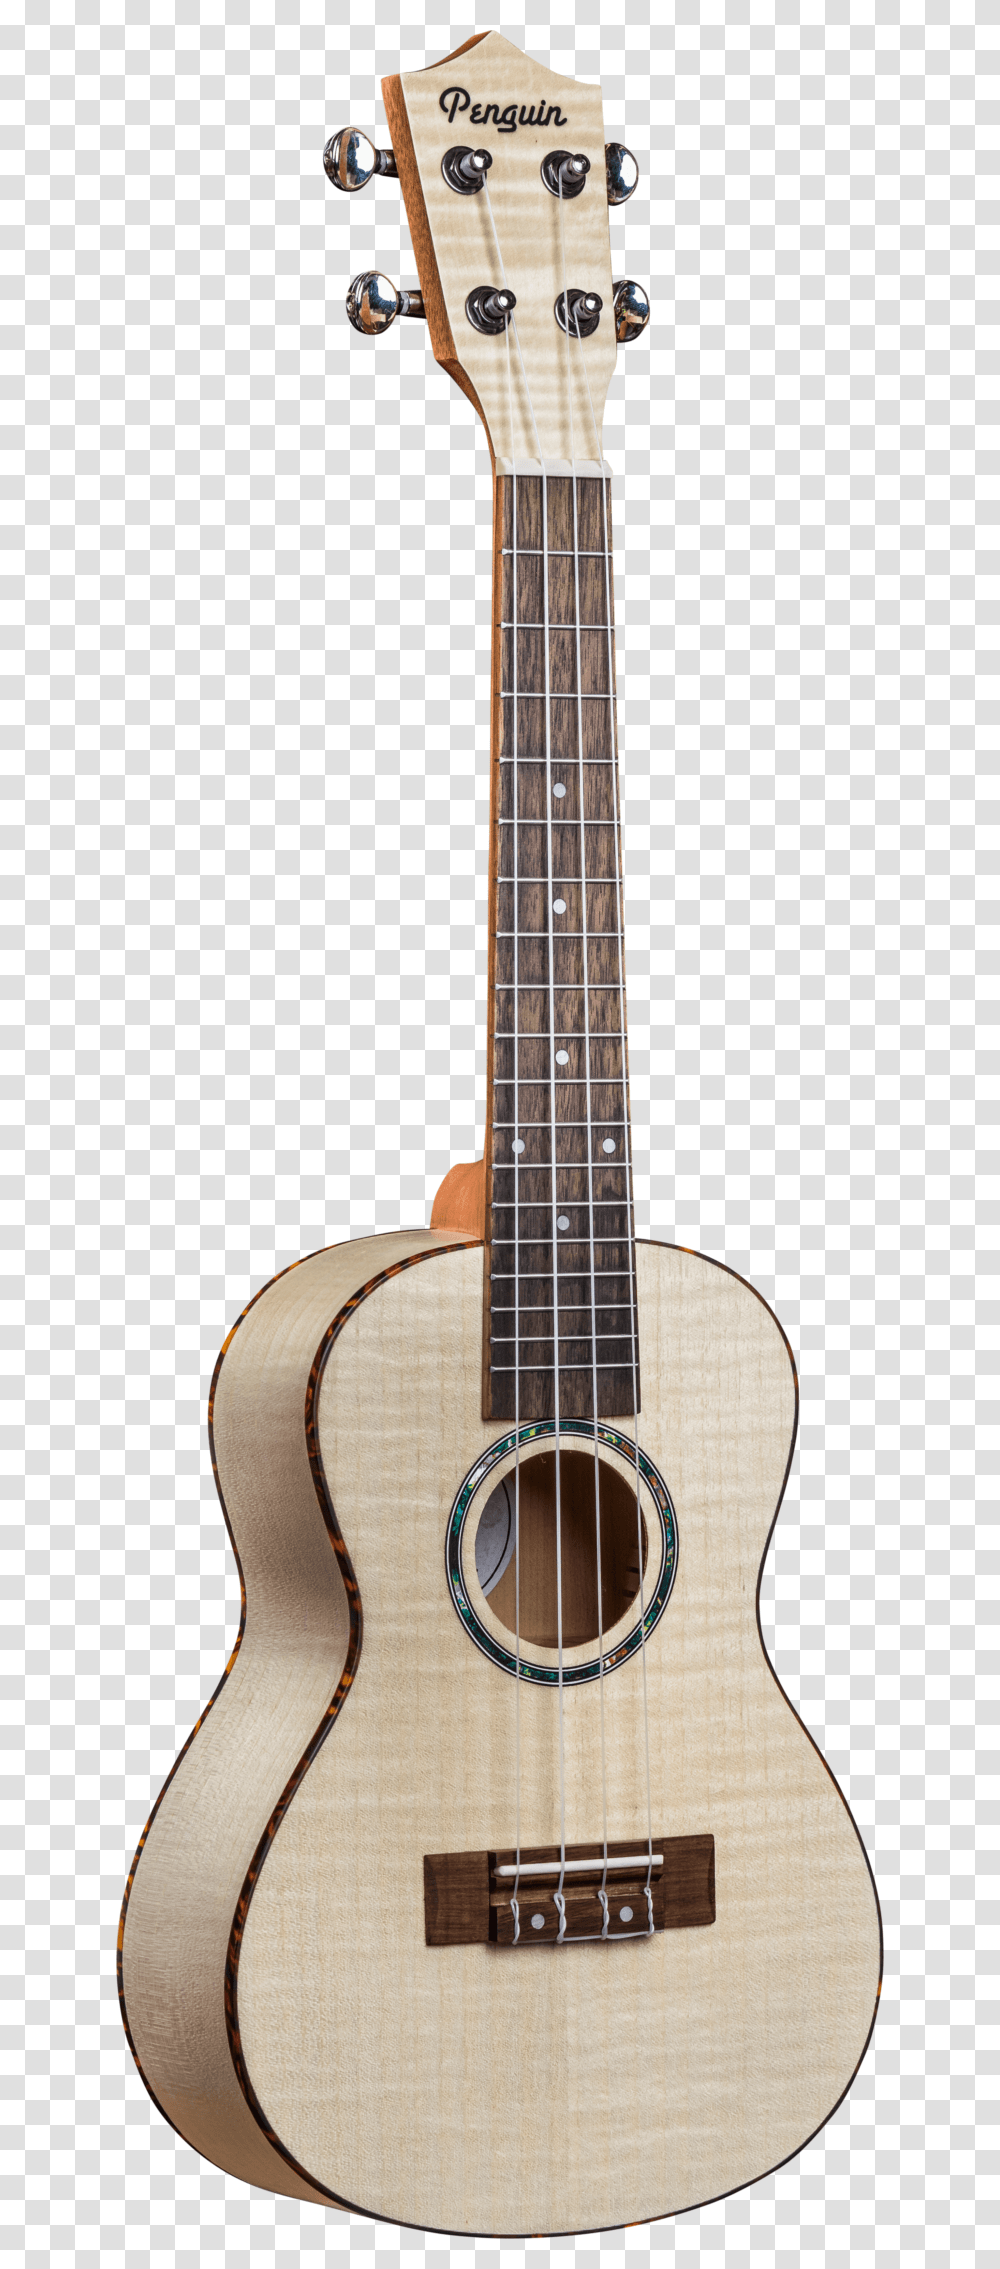 Penguin Flamed Maple, Guitar, Leisure Activities, Musical Instrument, Bass Guitar Transparent Png